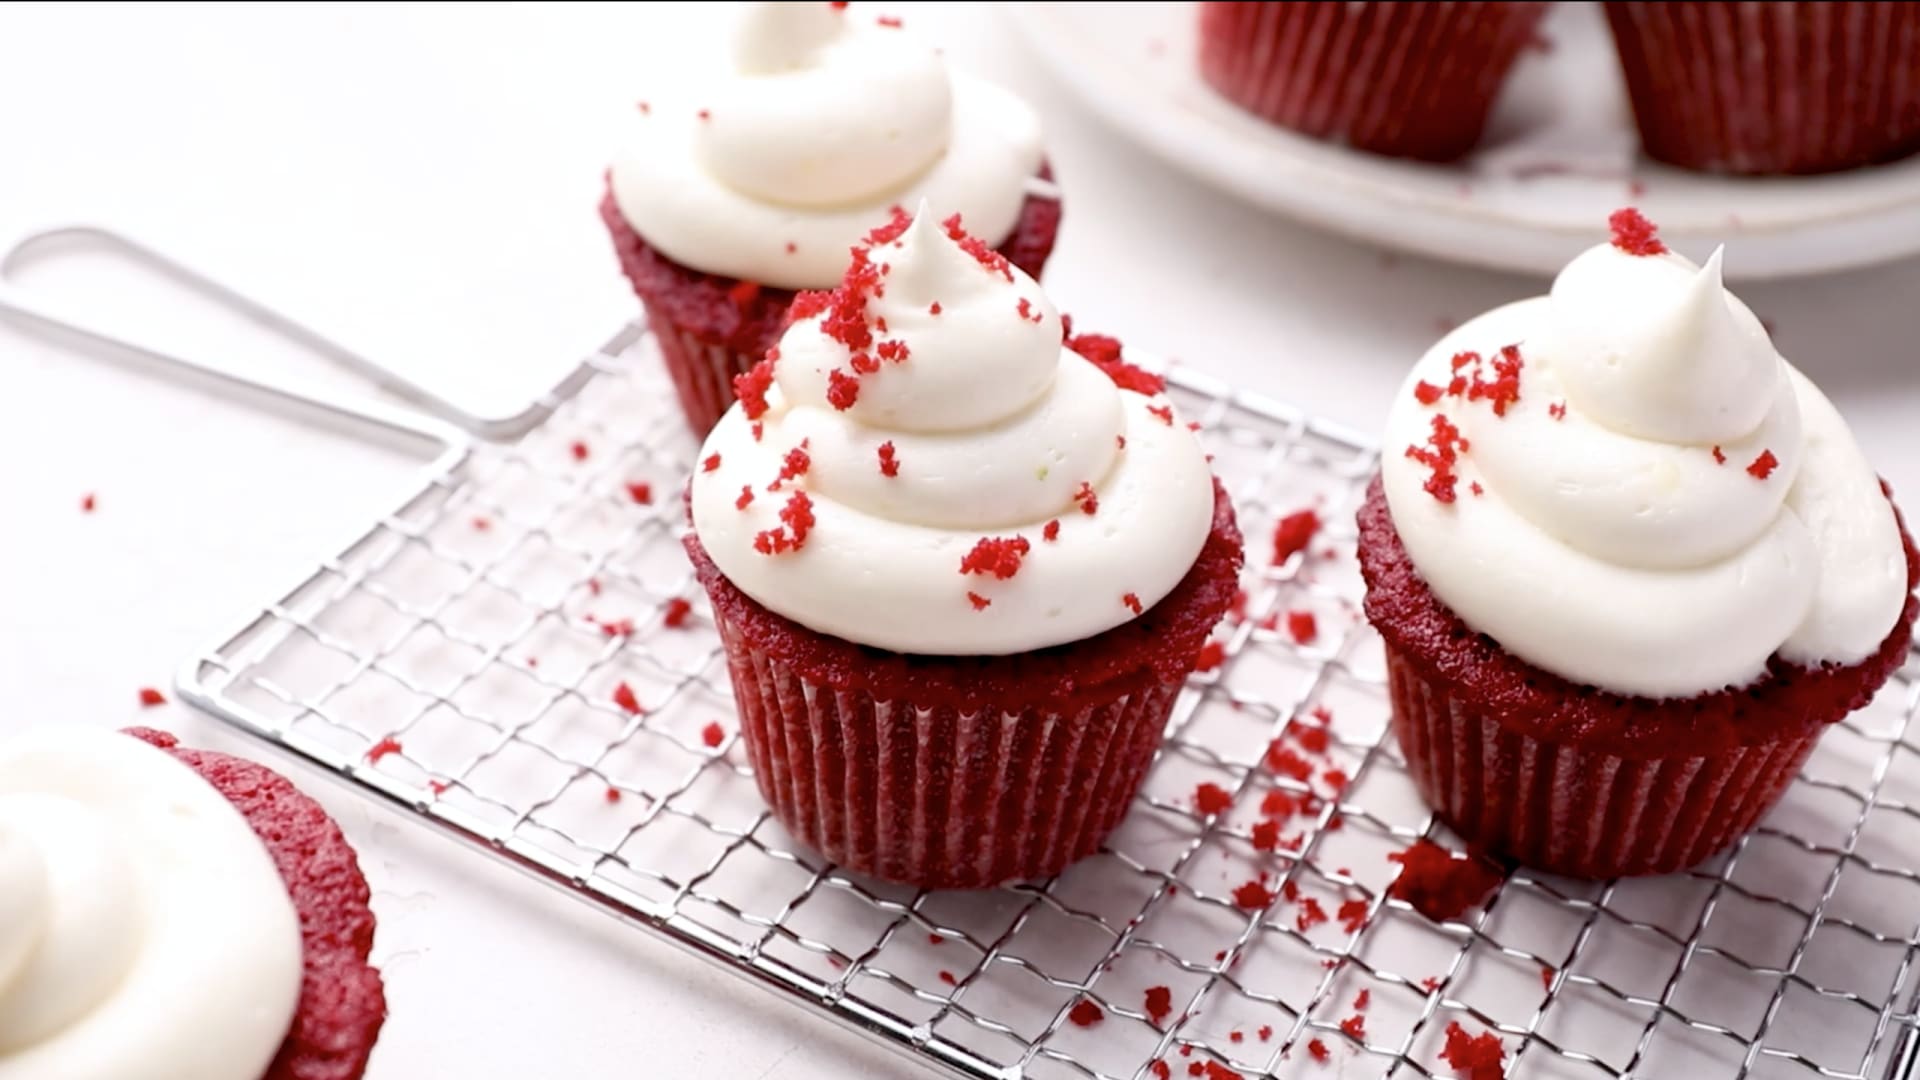 Red Velvet cupcakes 100 % natural sin colorante